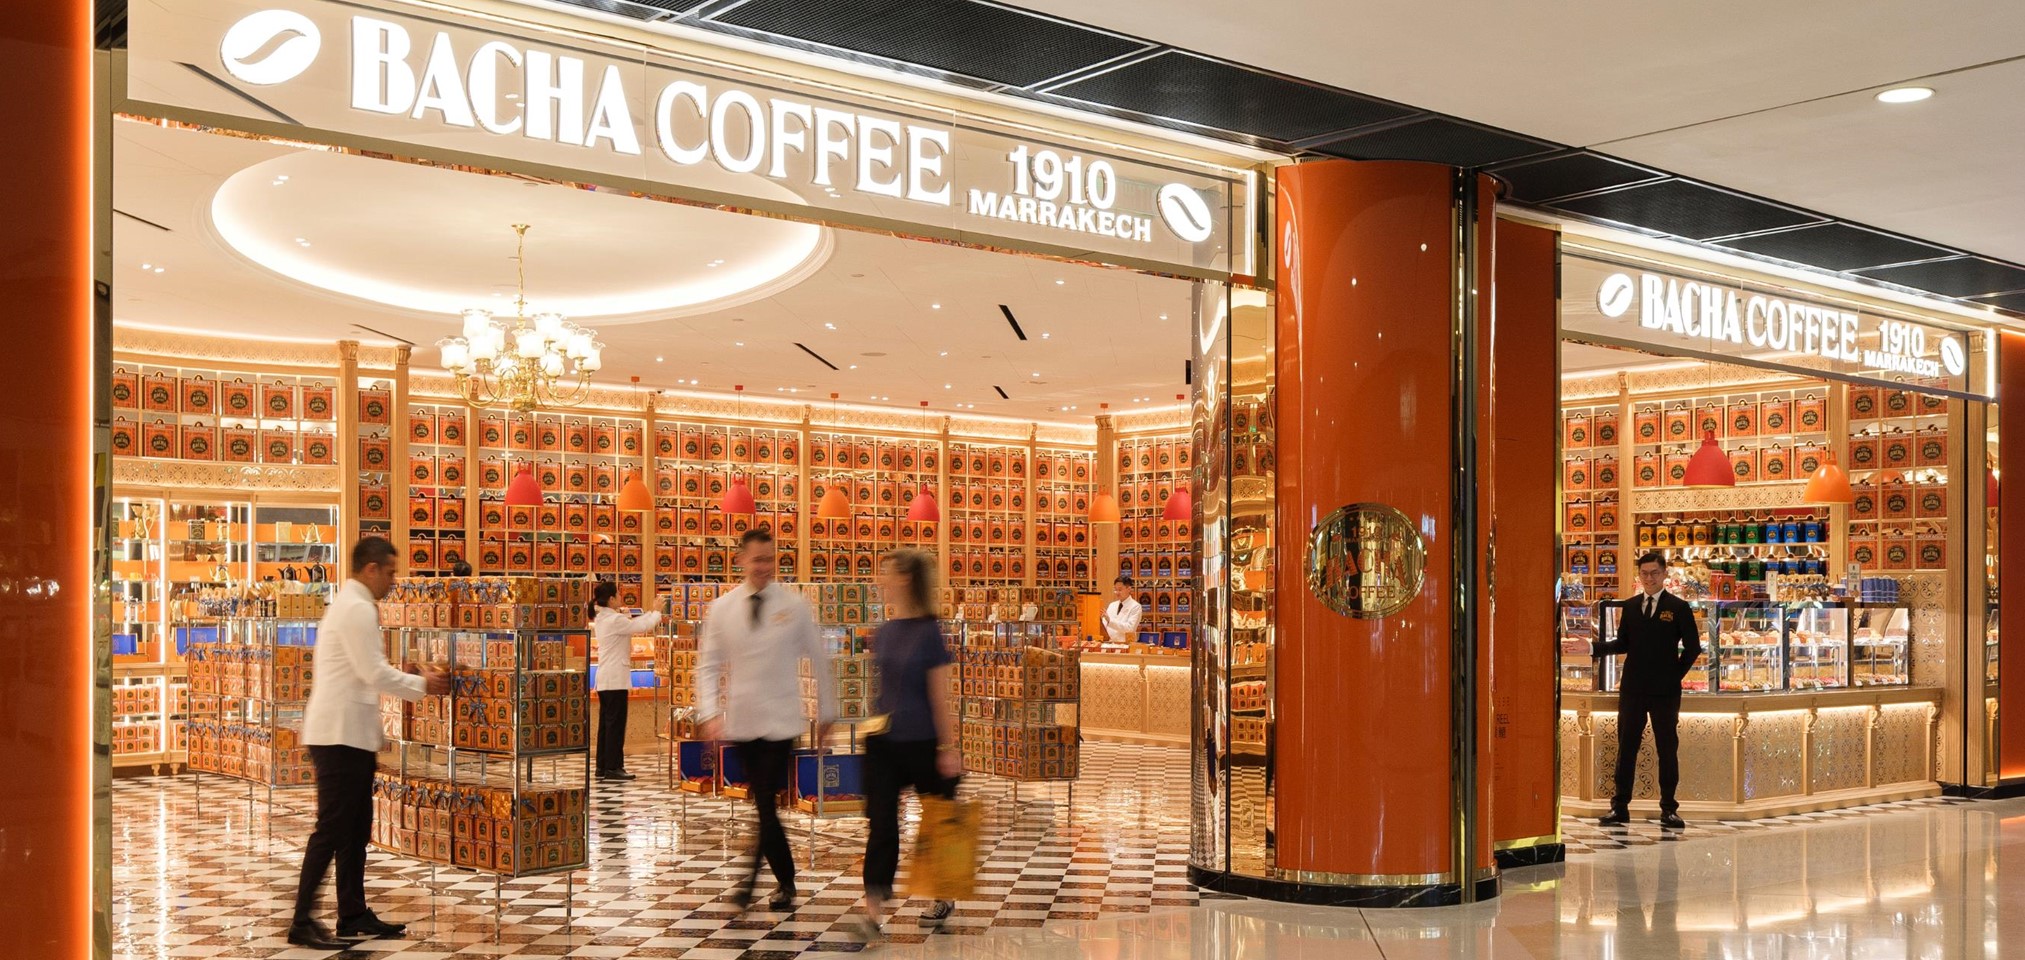 Bacha Coffee opens latest destination at Hong Kong IFC